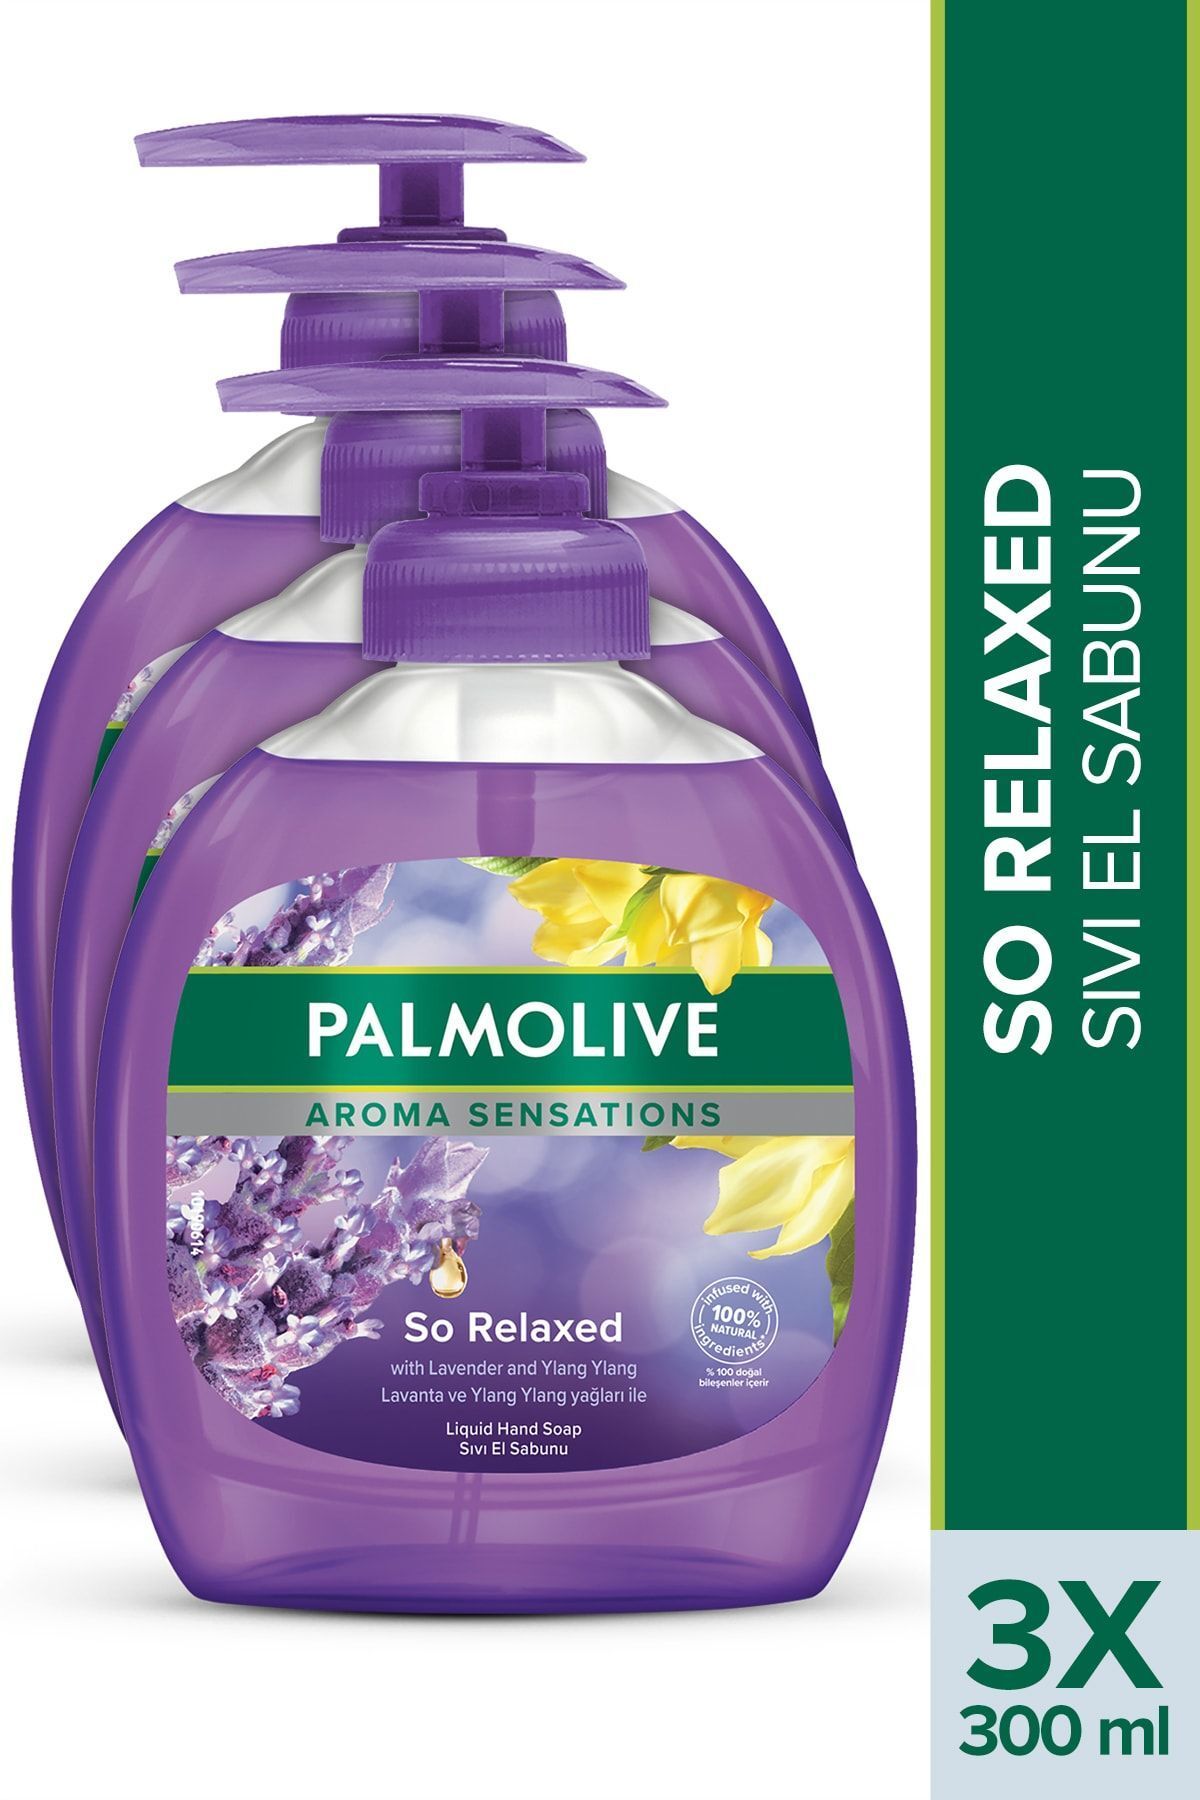 Palmolive Aroma Sensations So Relaxed Ylang Ylang Öz Yağı ve İris Özü ile Sıvı El Sabunu 3 x 300 ml